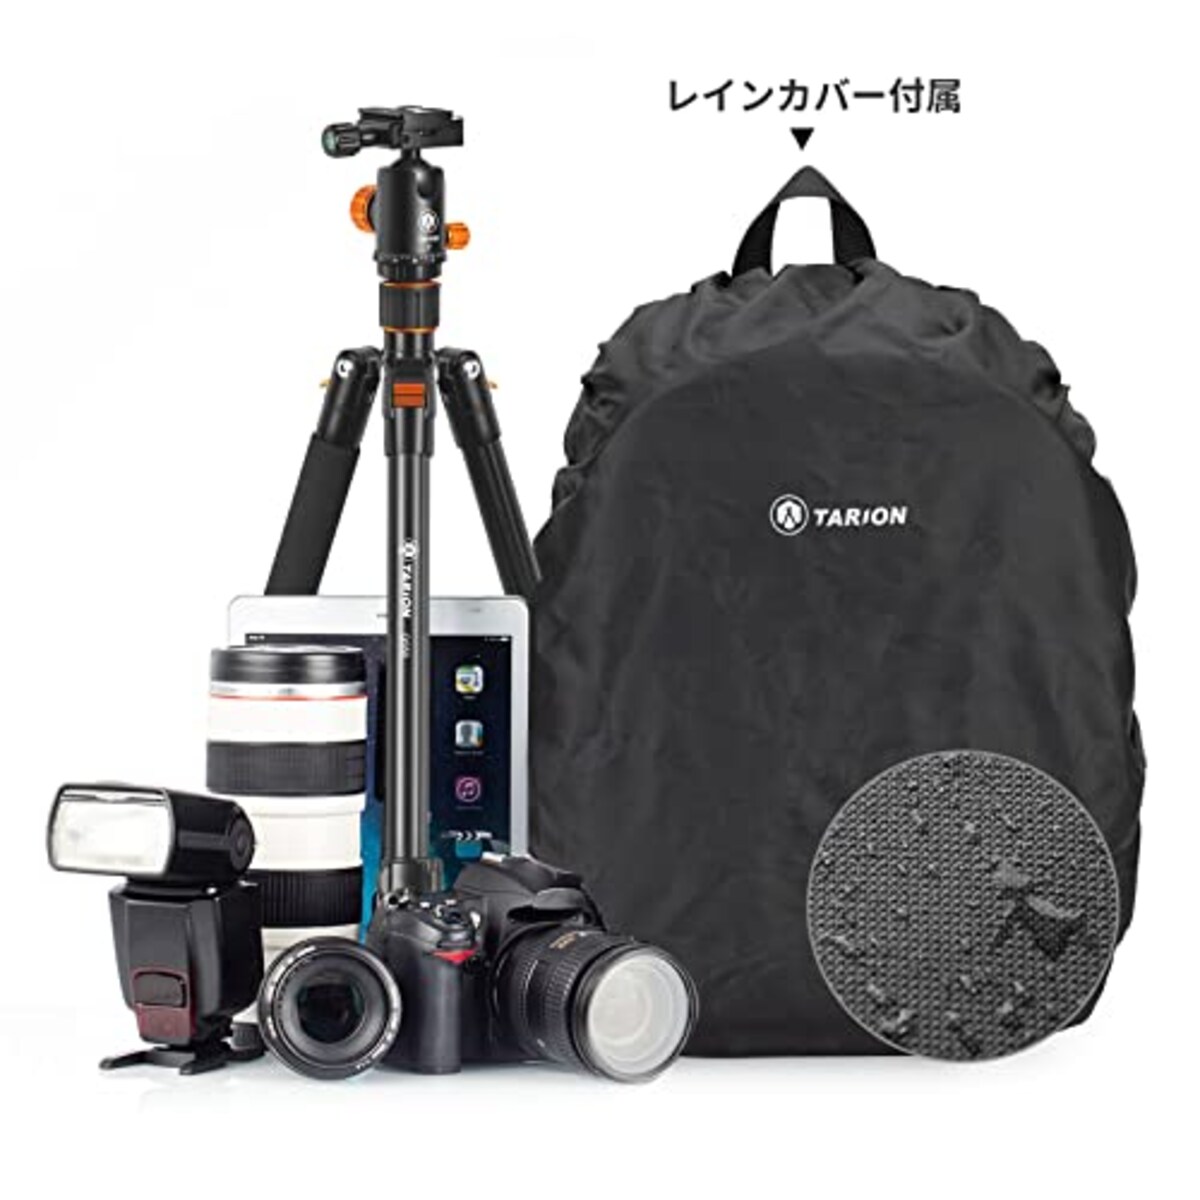  TARION カメラバッグ 軽量 コンパクト 十分な容量 三脚収納 カメラバックパック レインカバー付き カメラリュック 一眼レフカメラバッグ リュック カメラ/ドローンなど適用 ブラック TBM画像5 